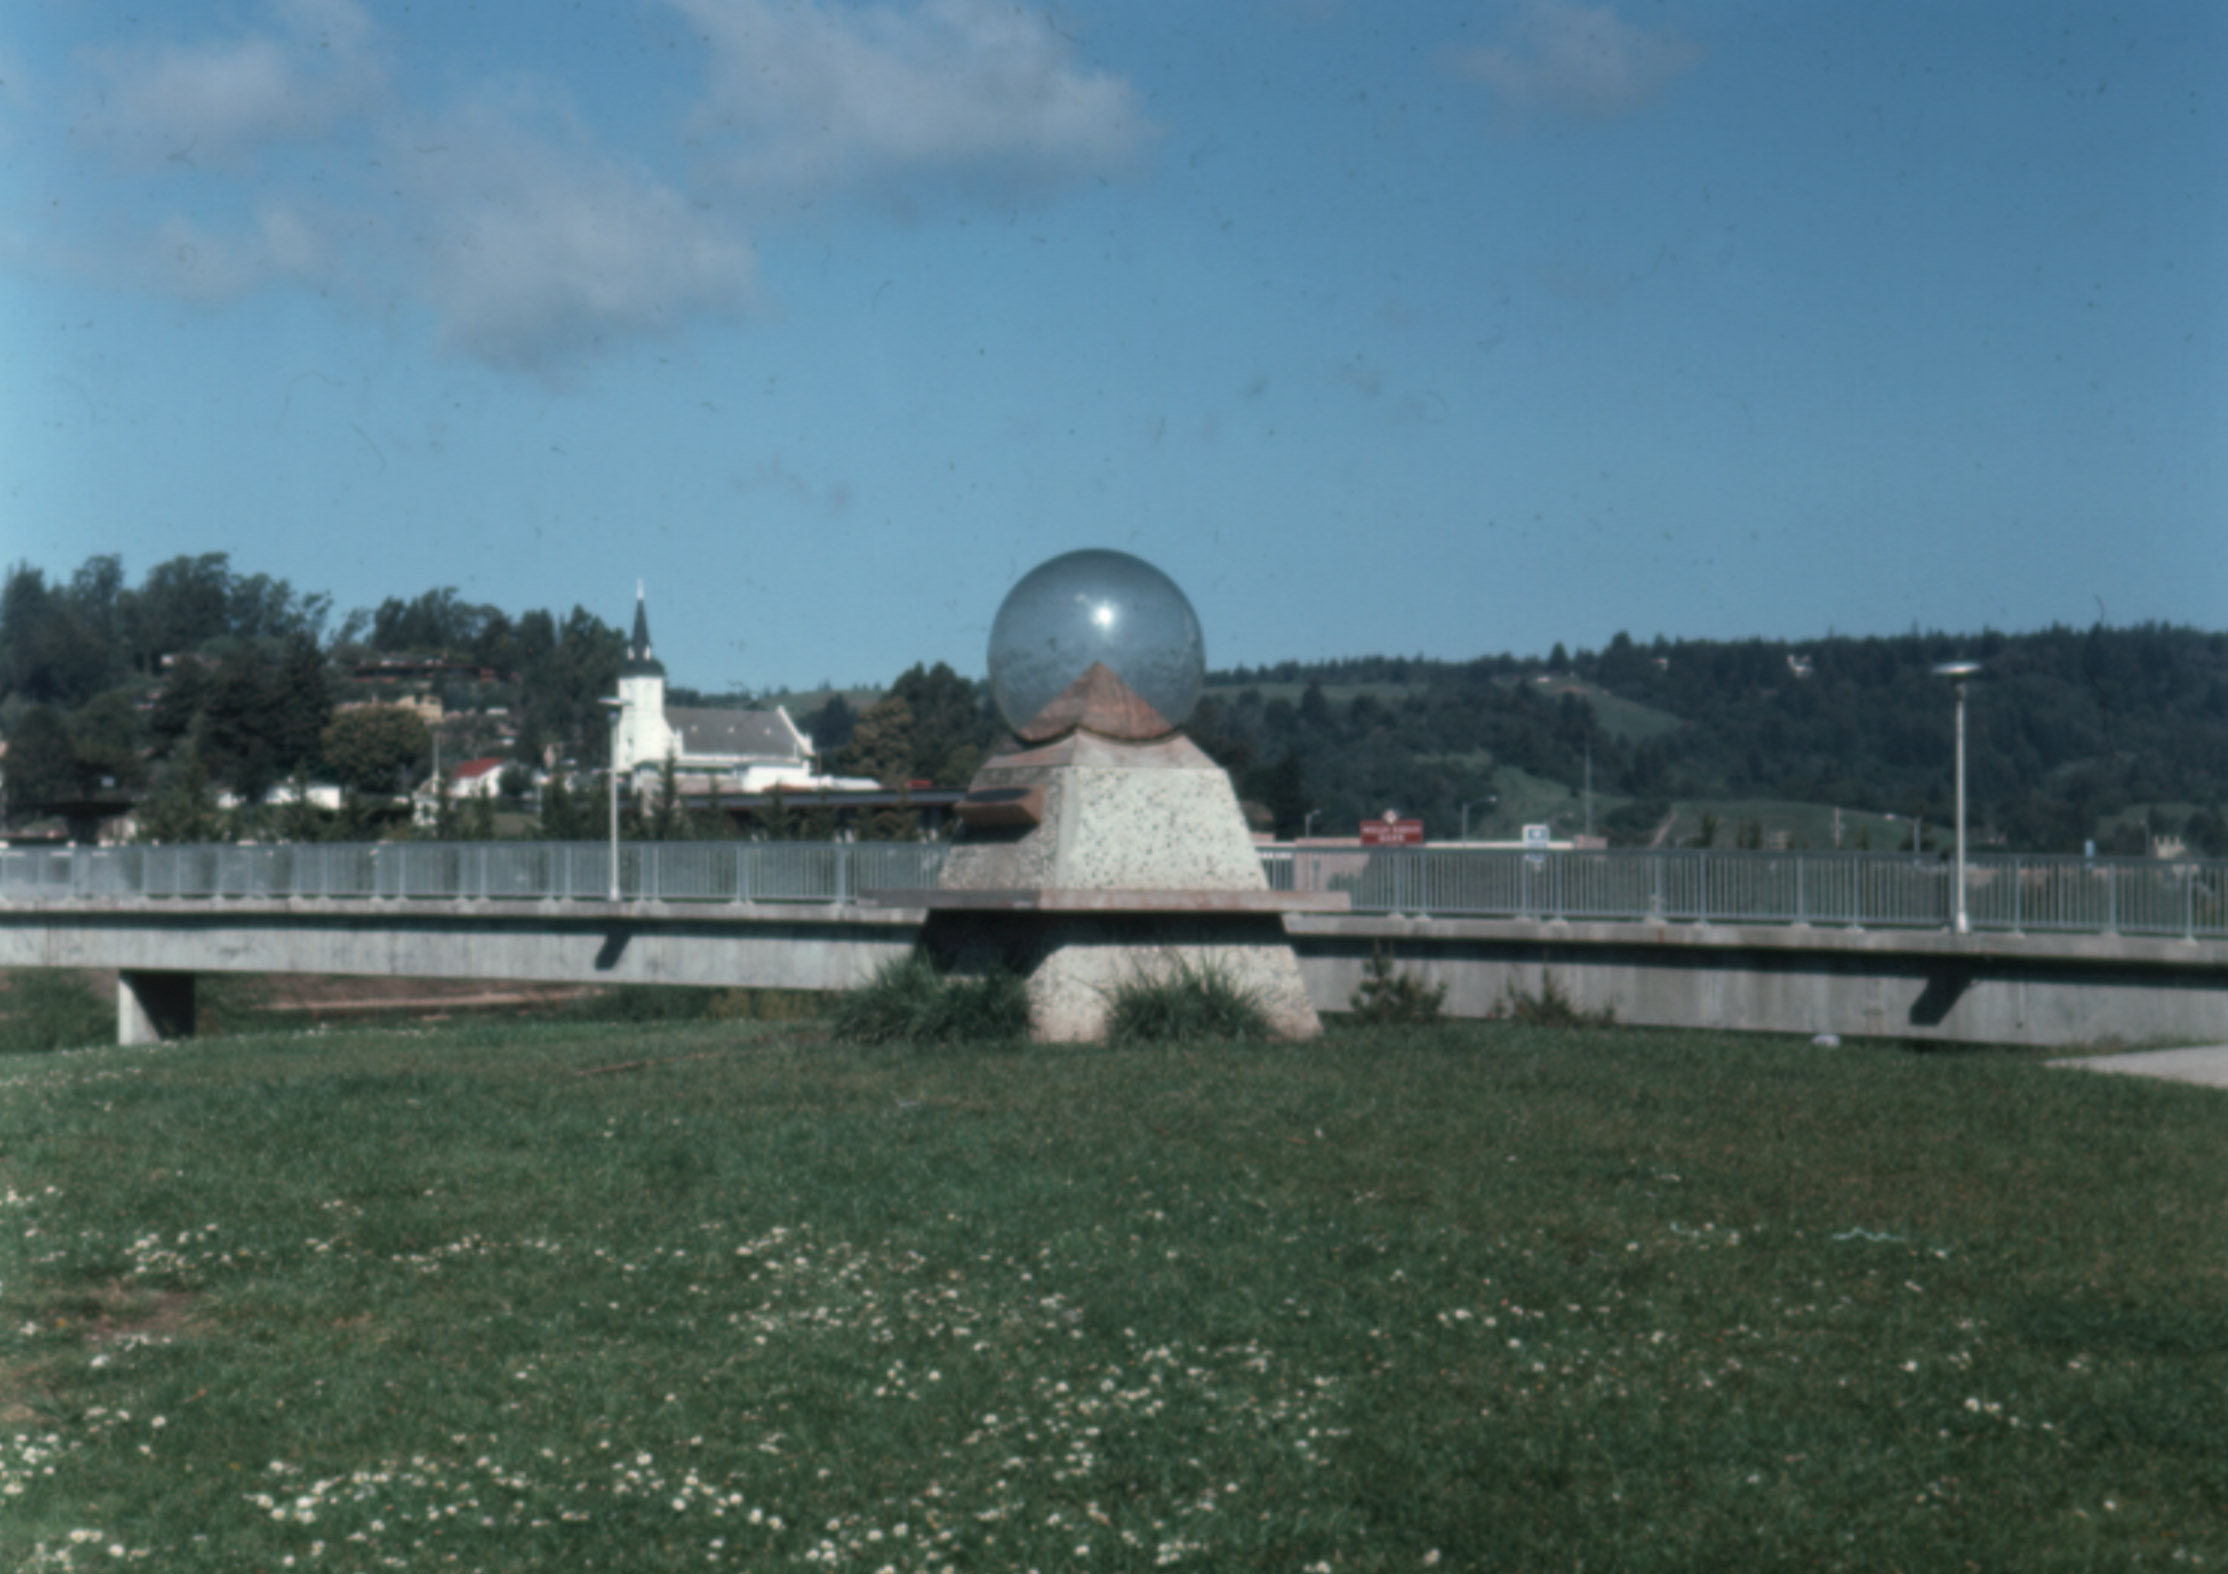 Wenger Sundial in San Lorenzo Park, Santa Cruz, CA 1970s